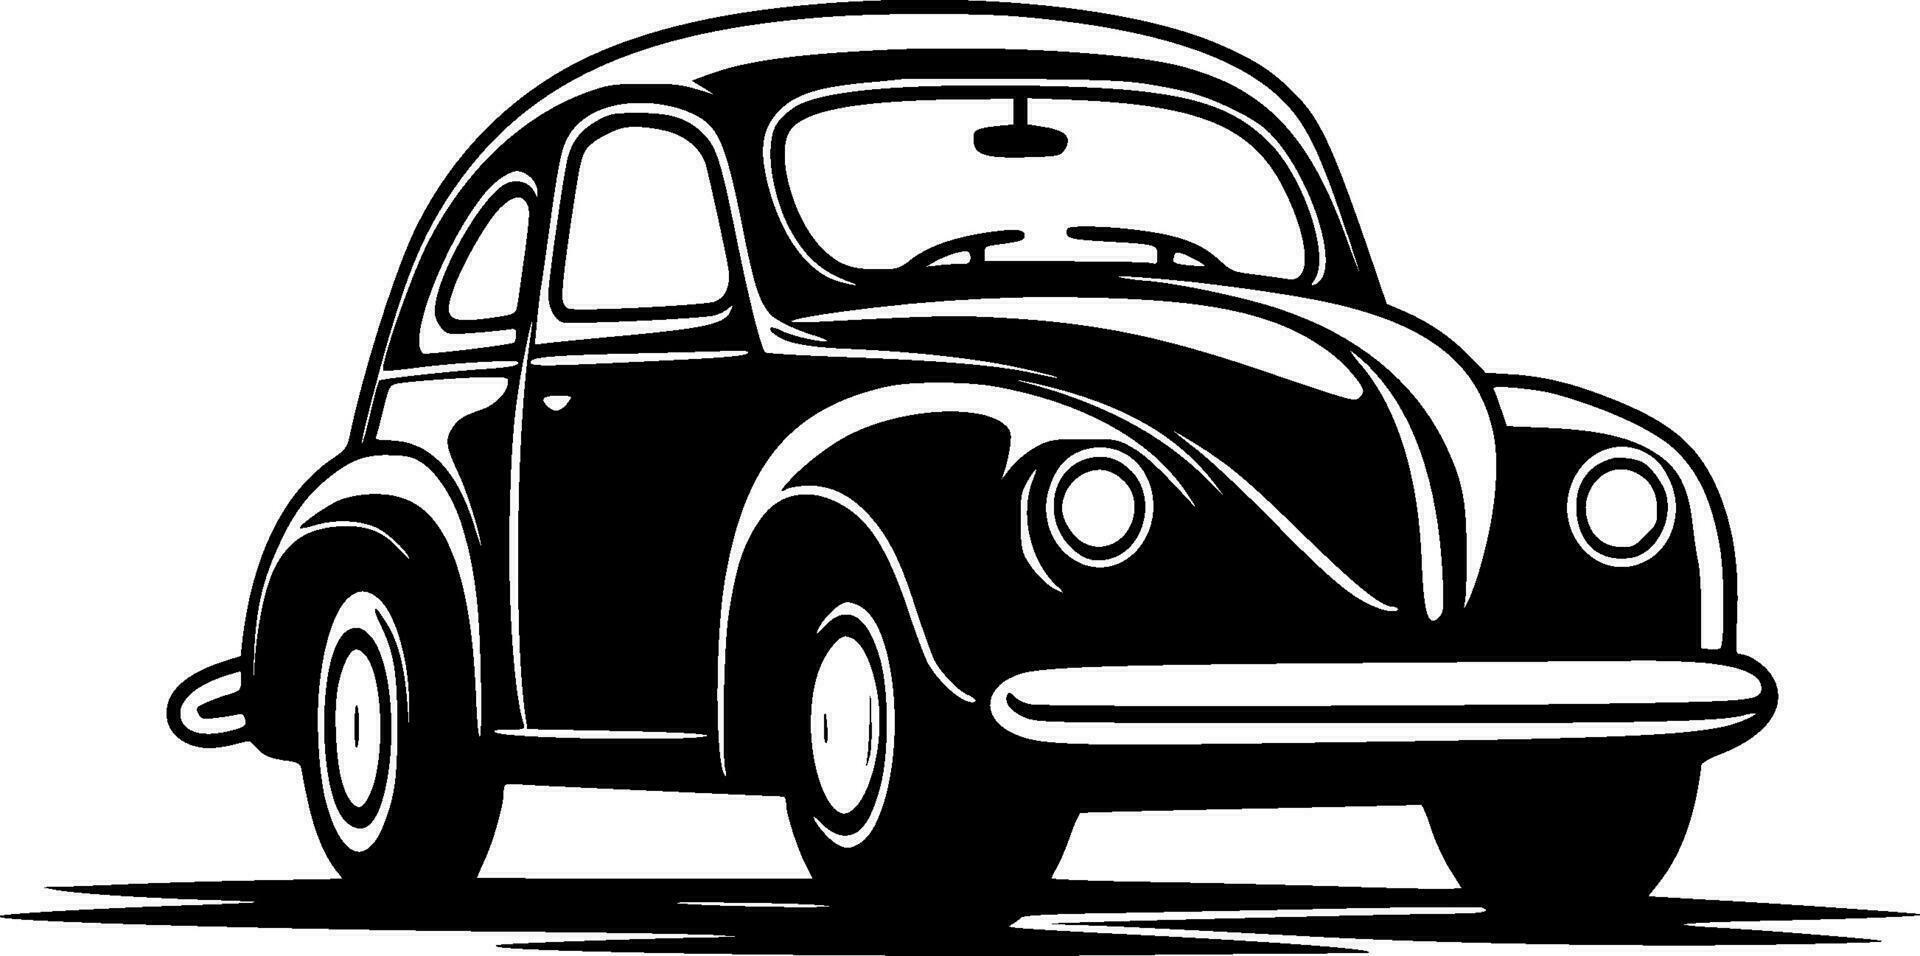 carro - minimalista e plano logotipo - vetor ilustração